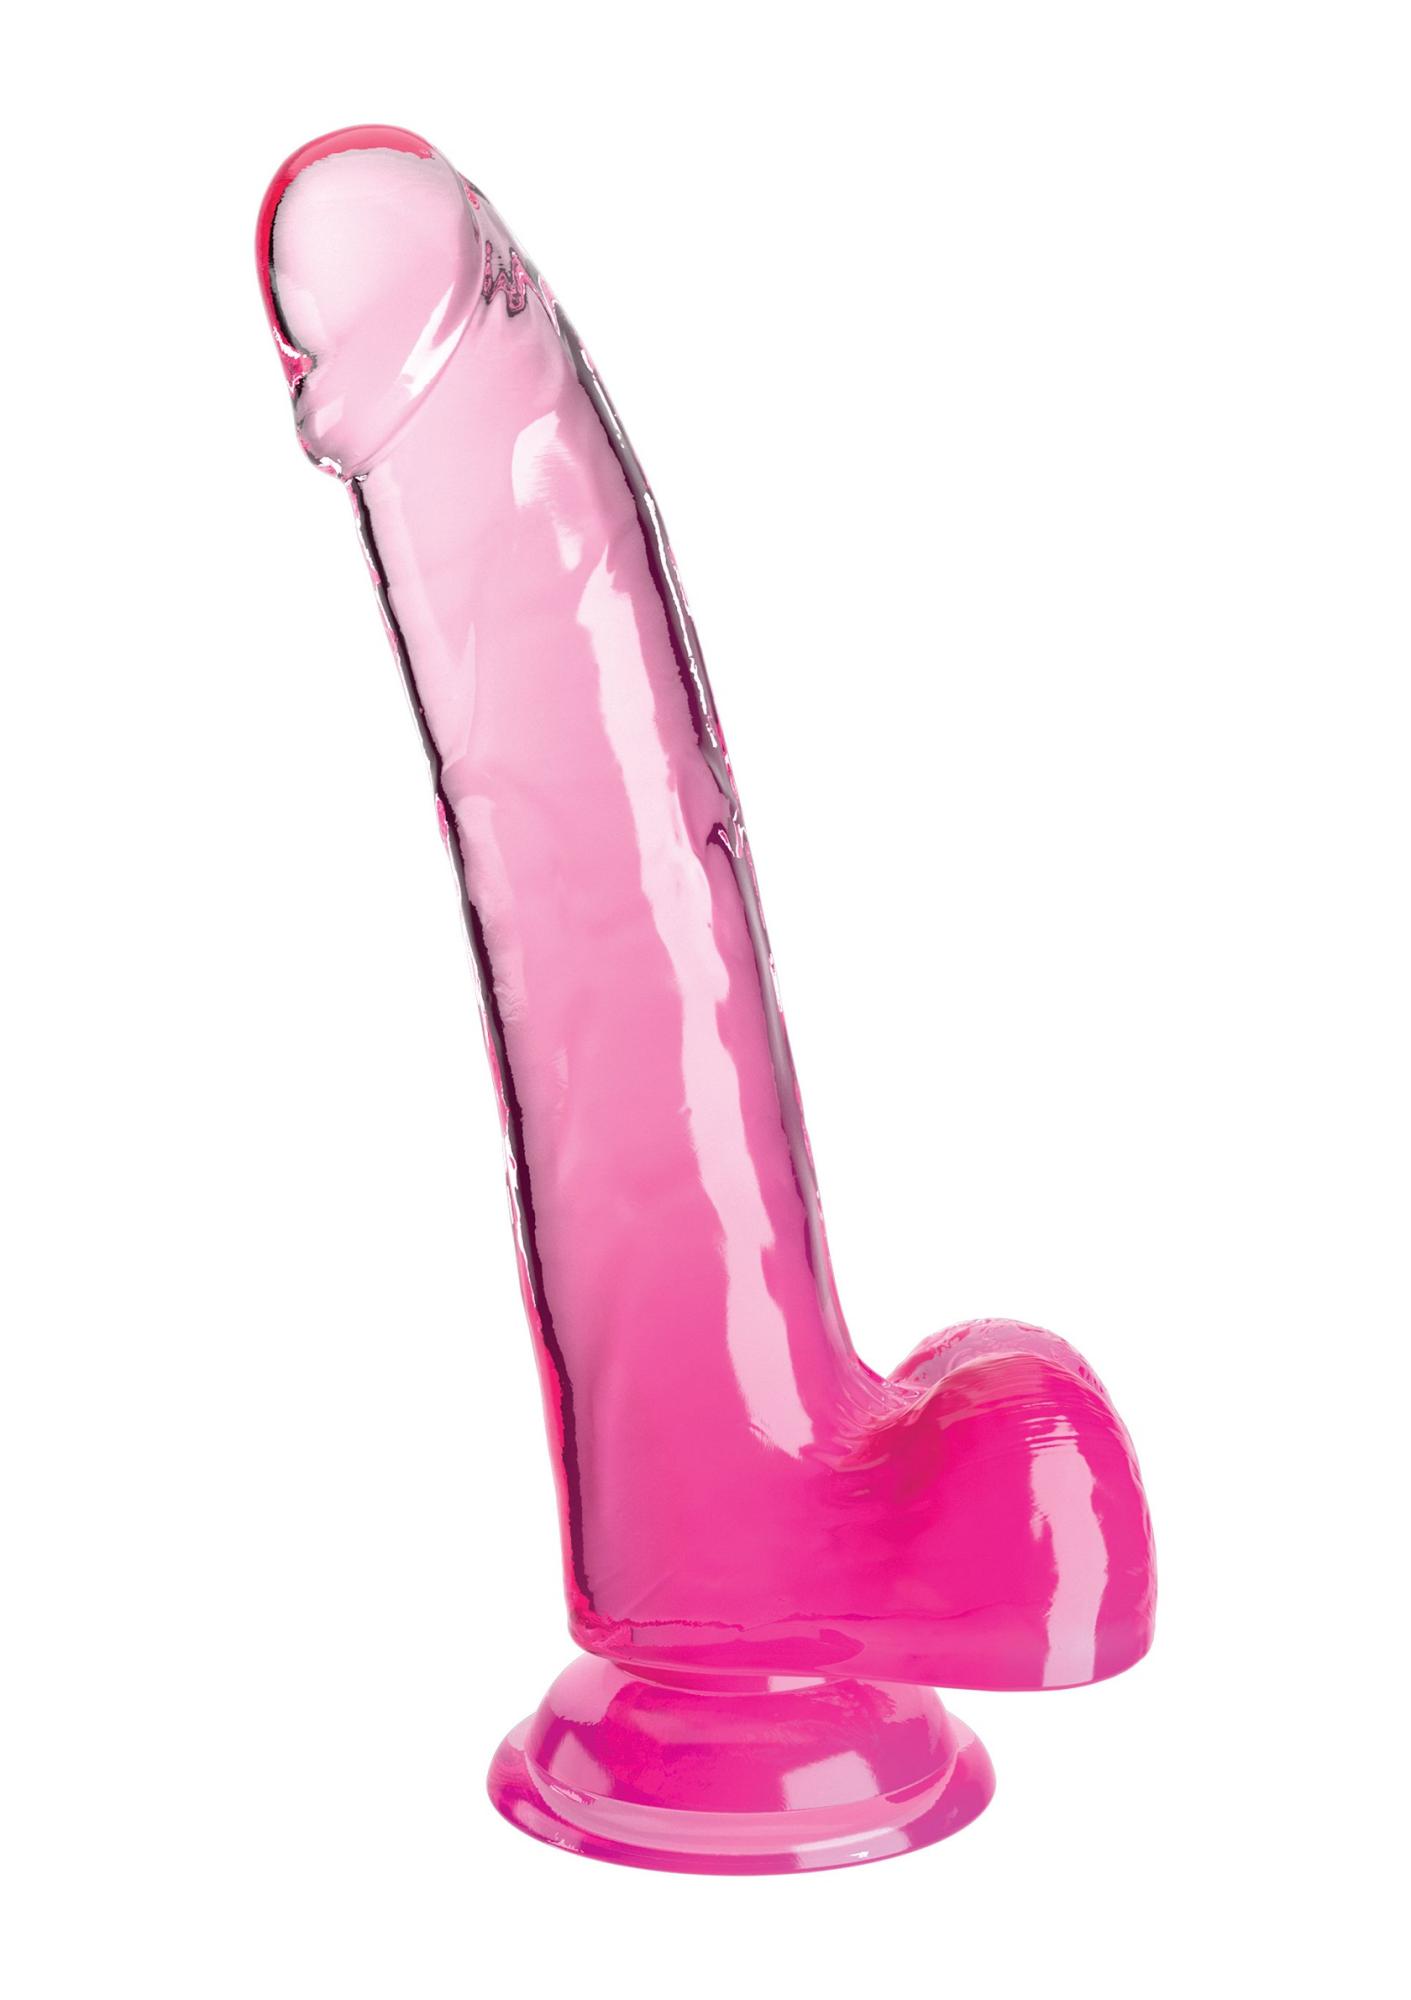 PipeDream King Cock Clear 9 - Прозрачный фаллоимитатор с мошонкой на присоске, 24.8х4.5 см (розовый) - фото 1